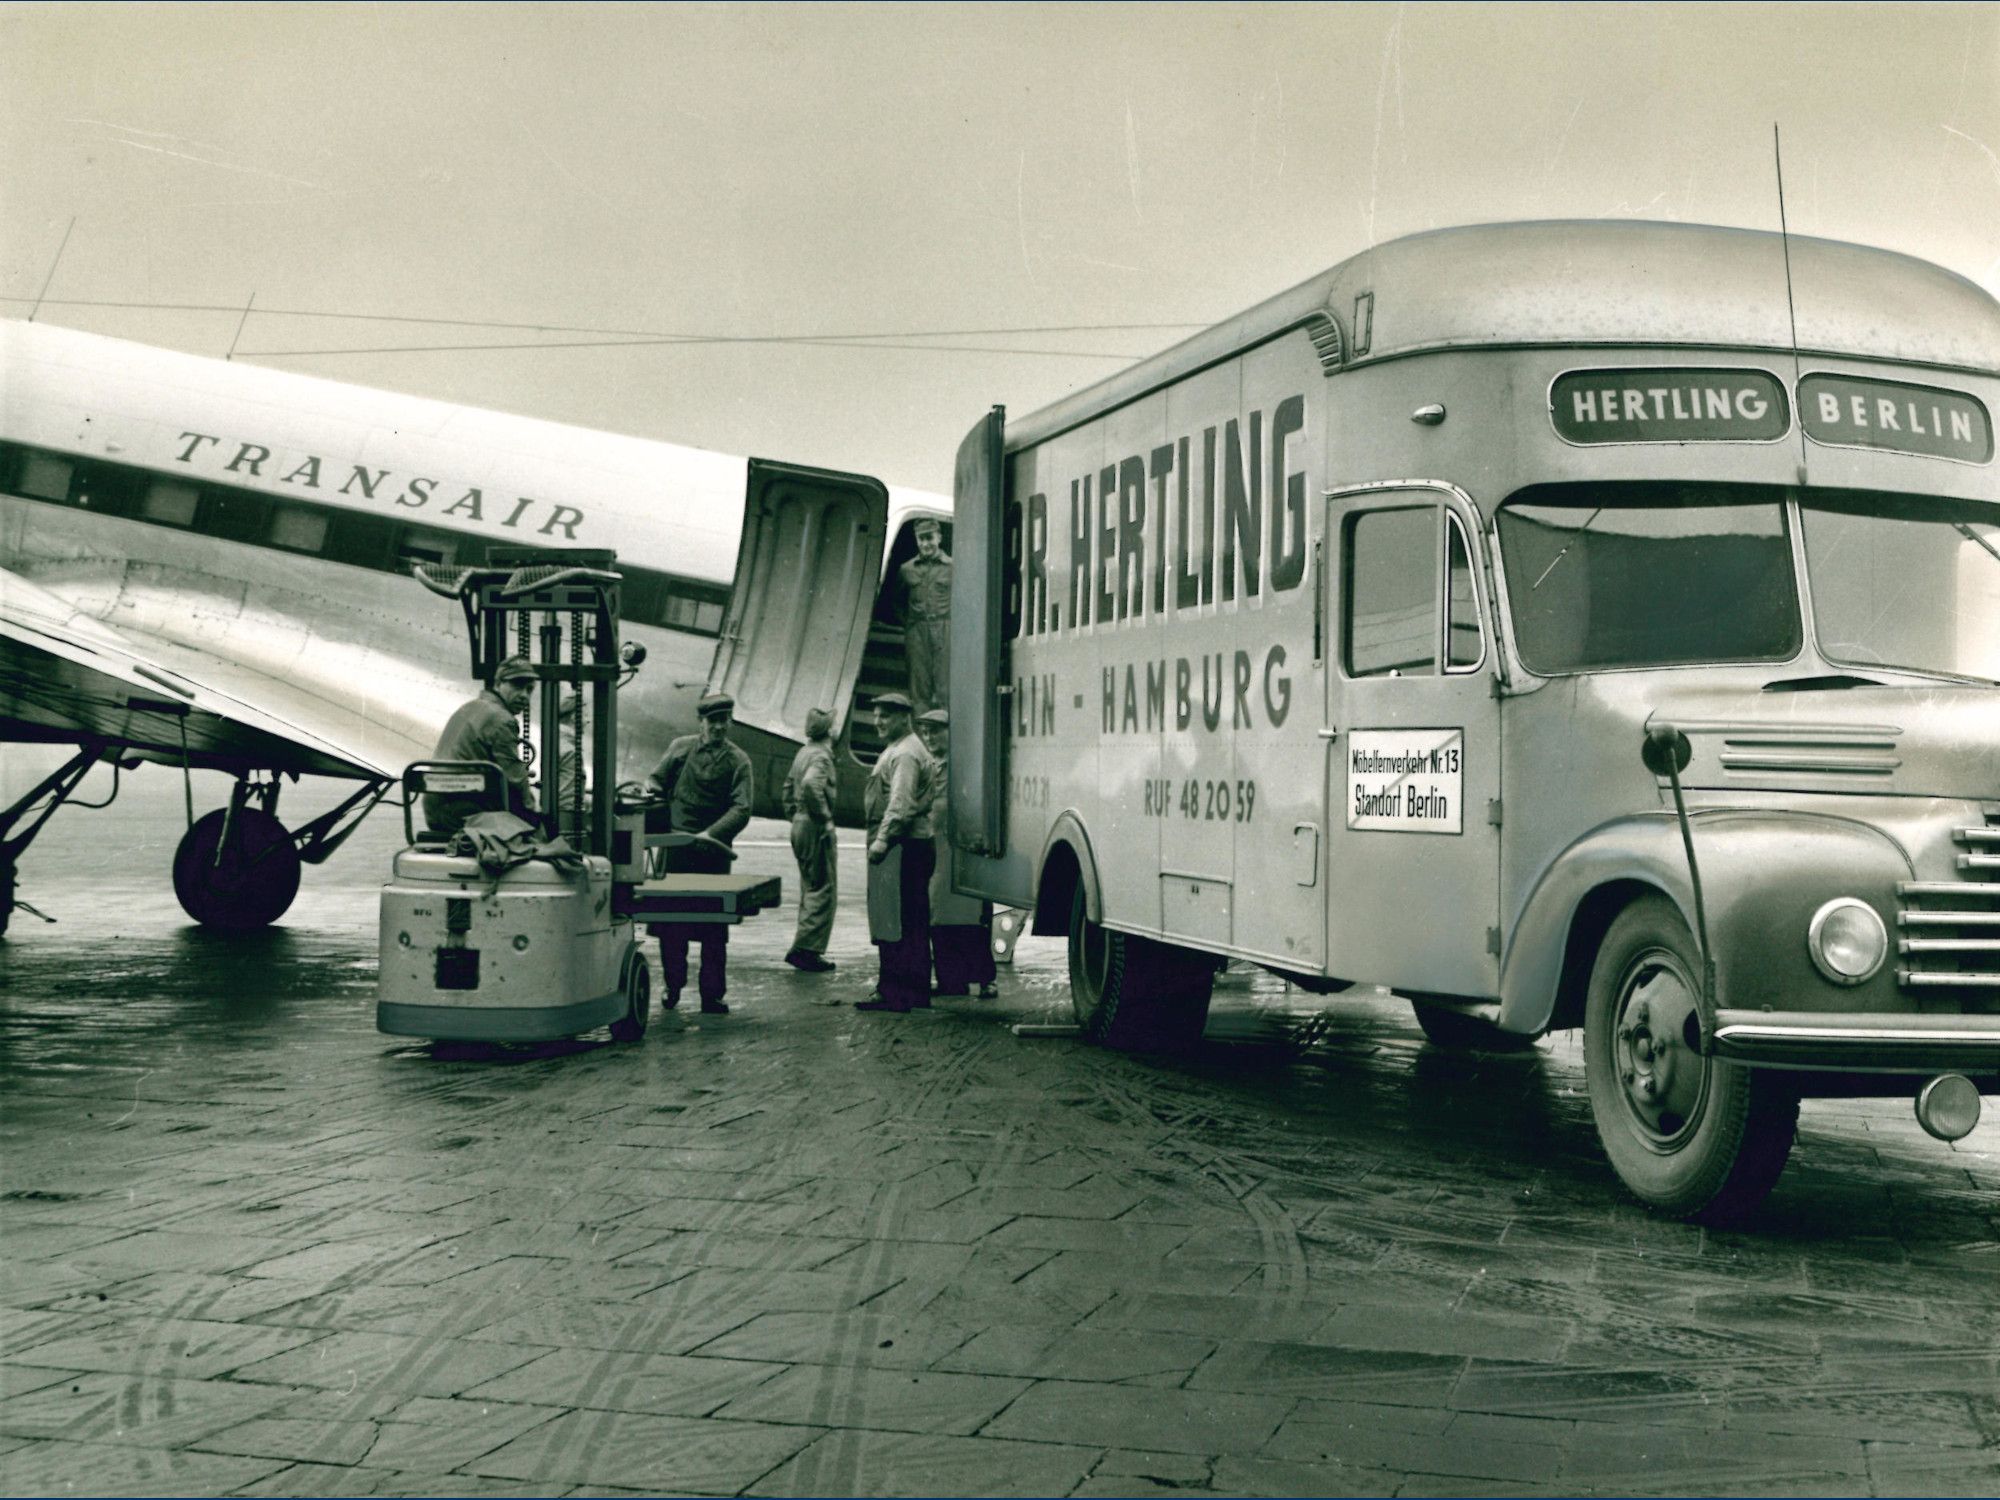 HERTLING Airlift Berlin Photo